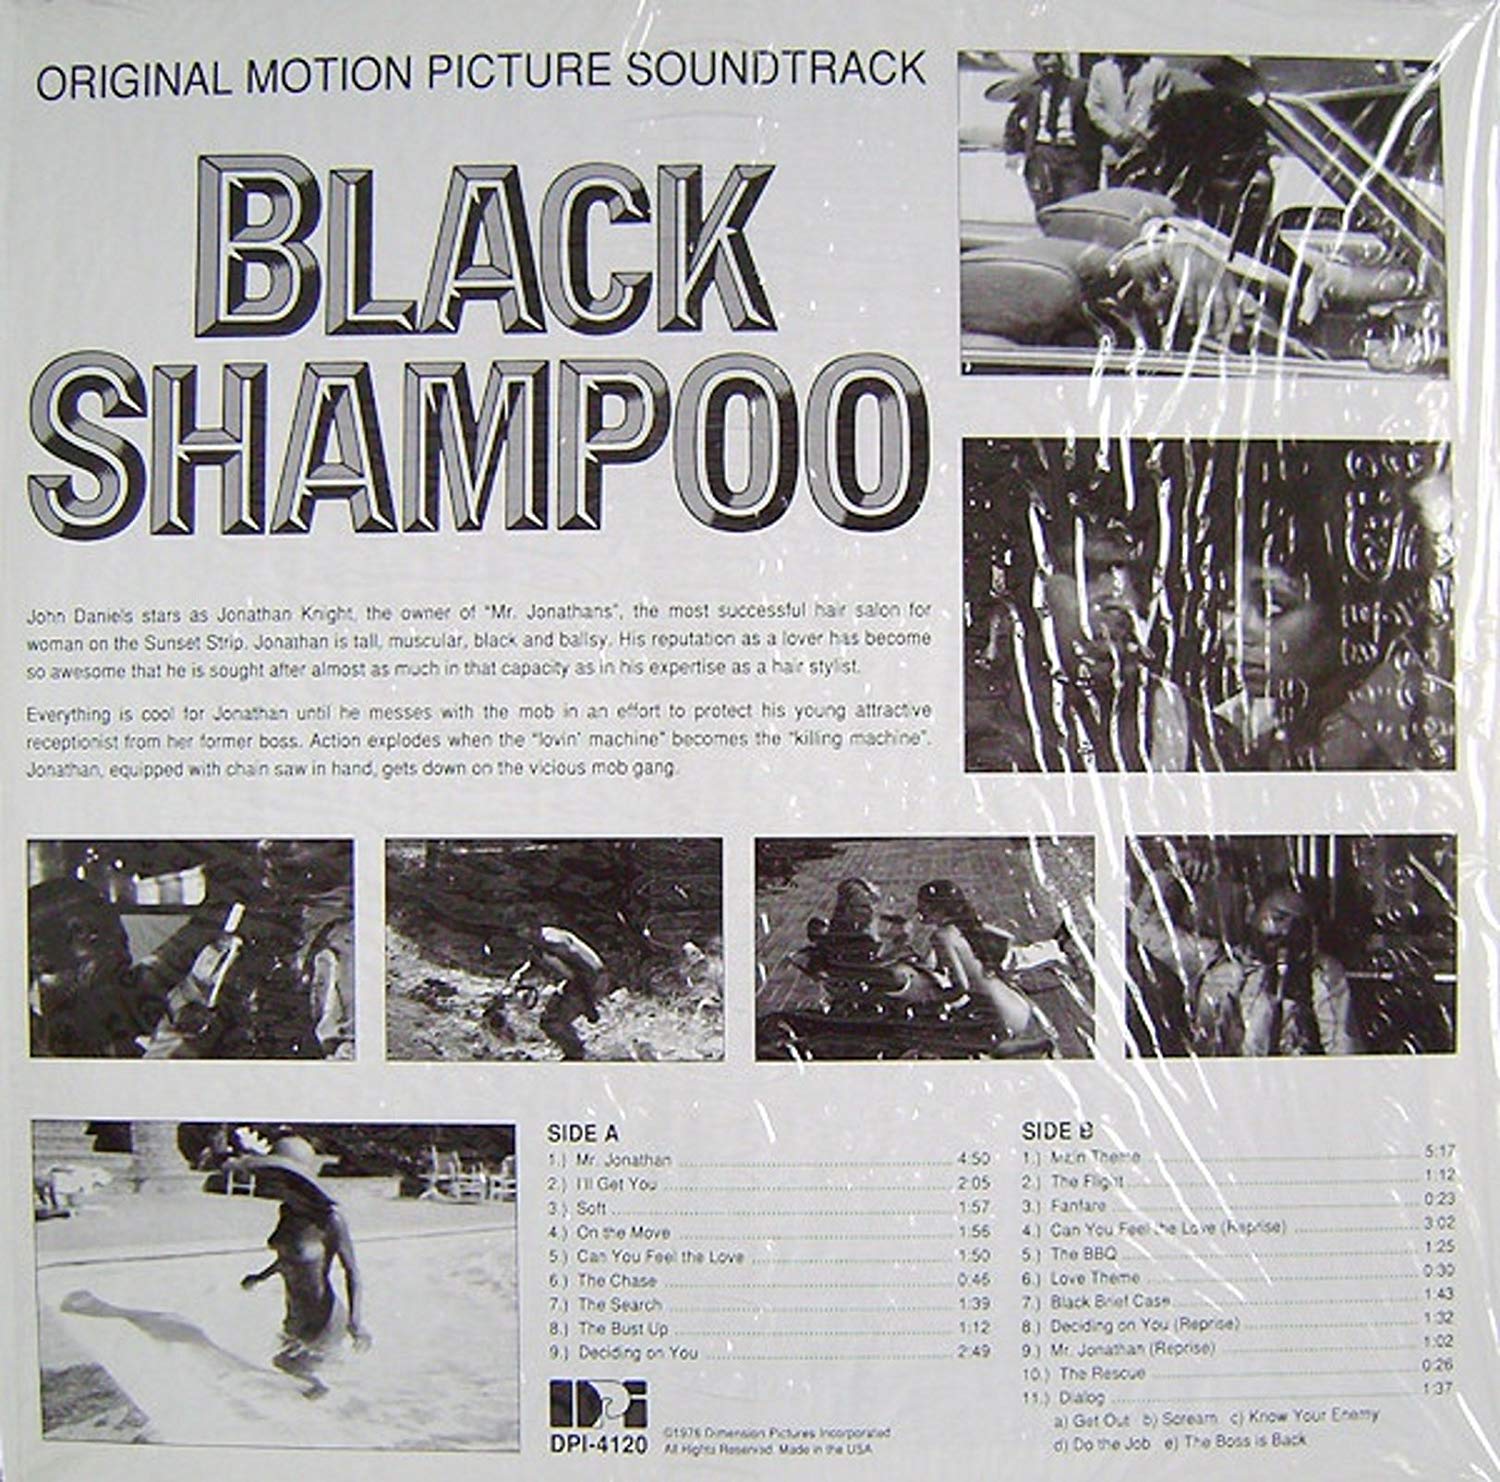 Black Shampoo Soundtrack Download